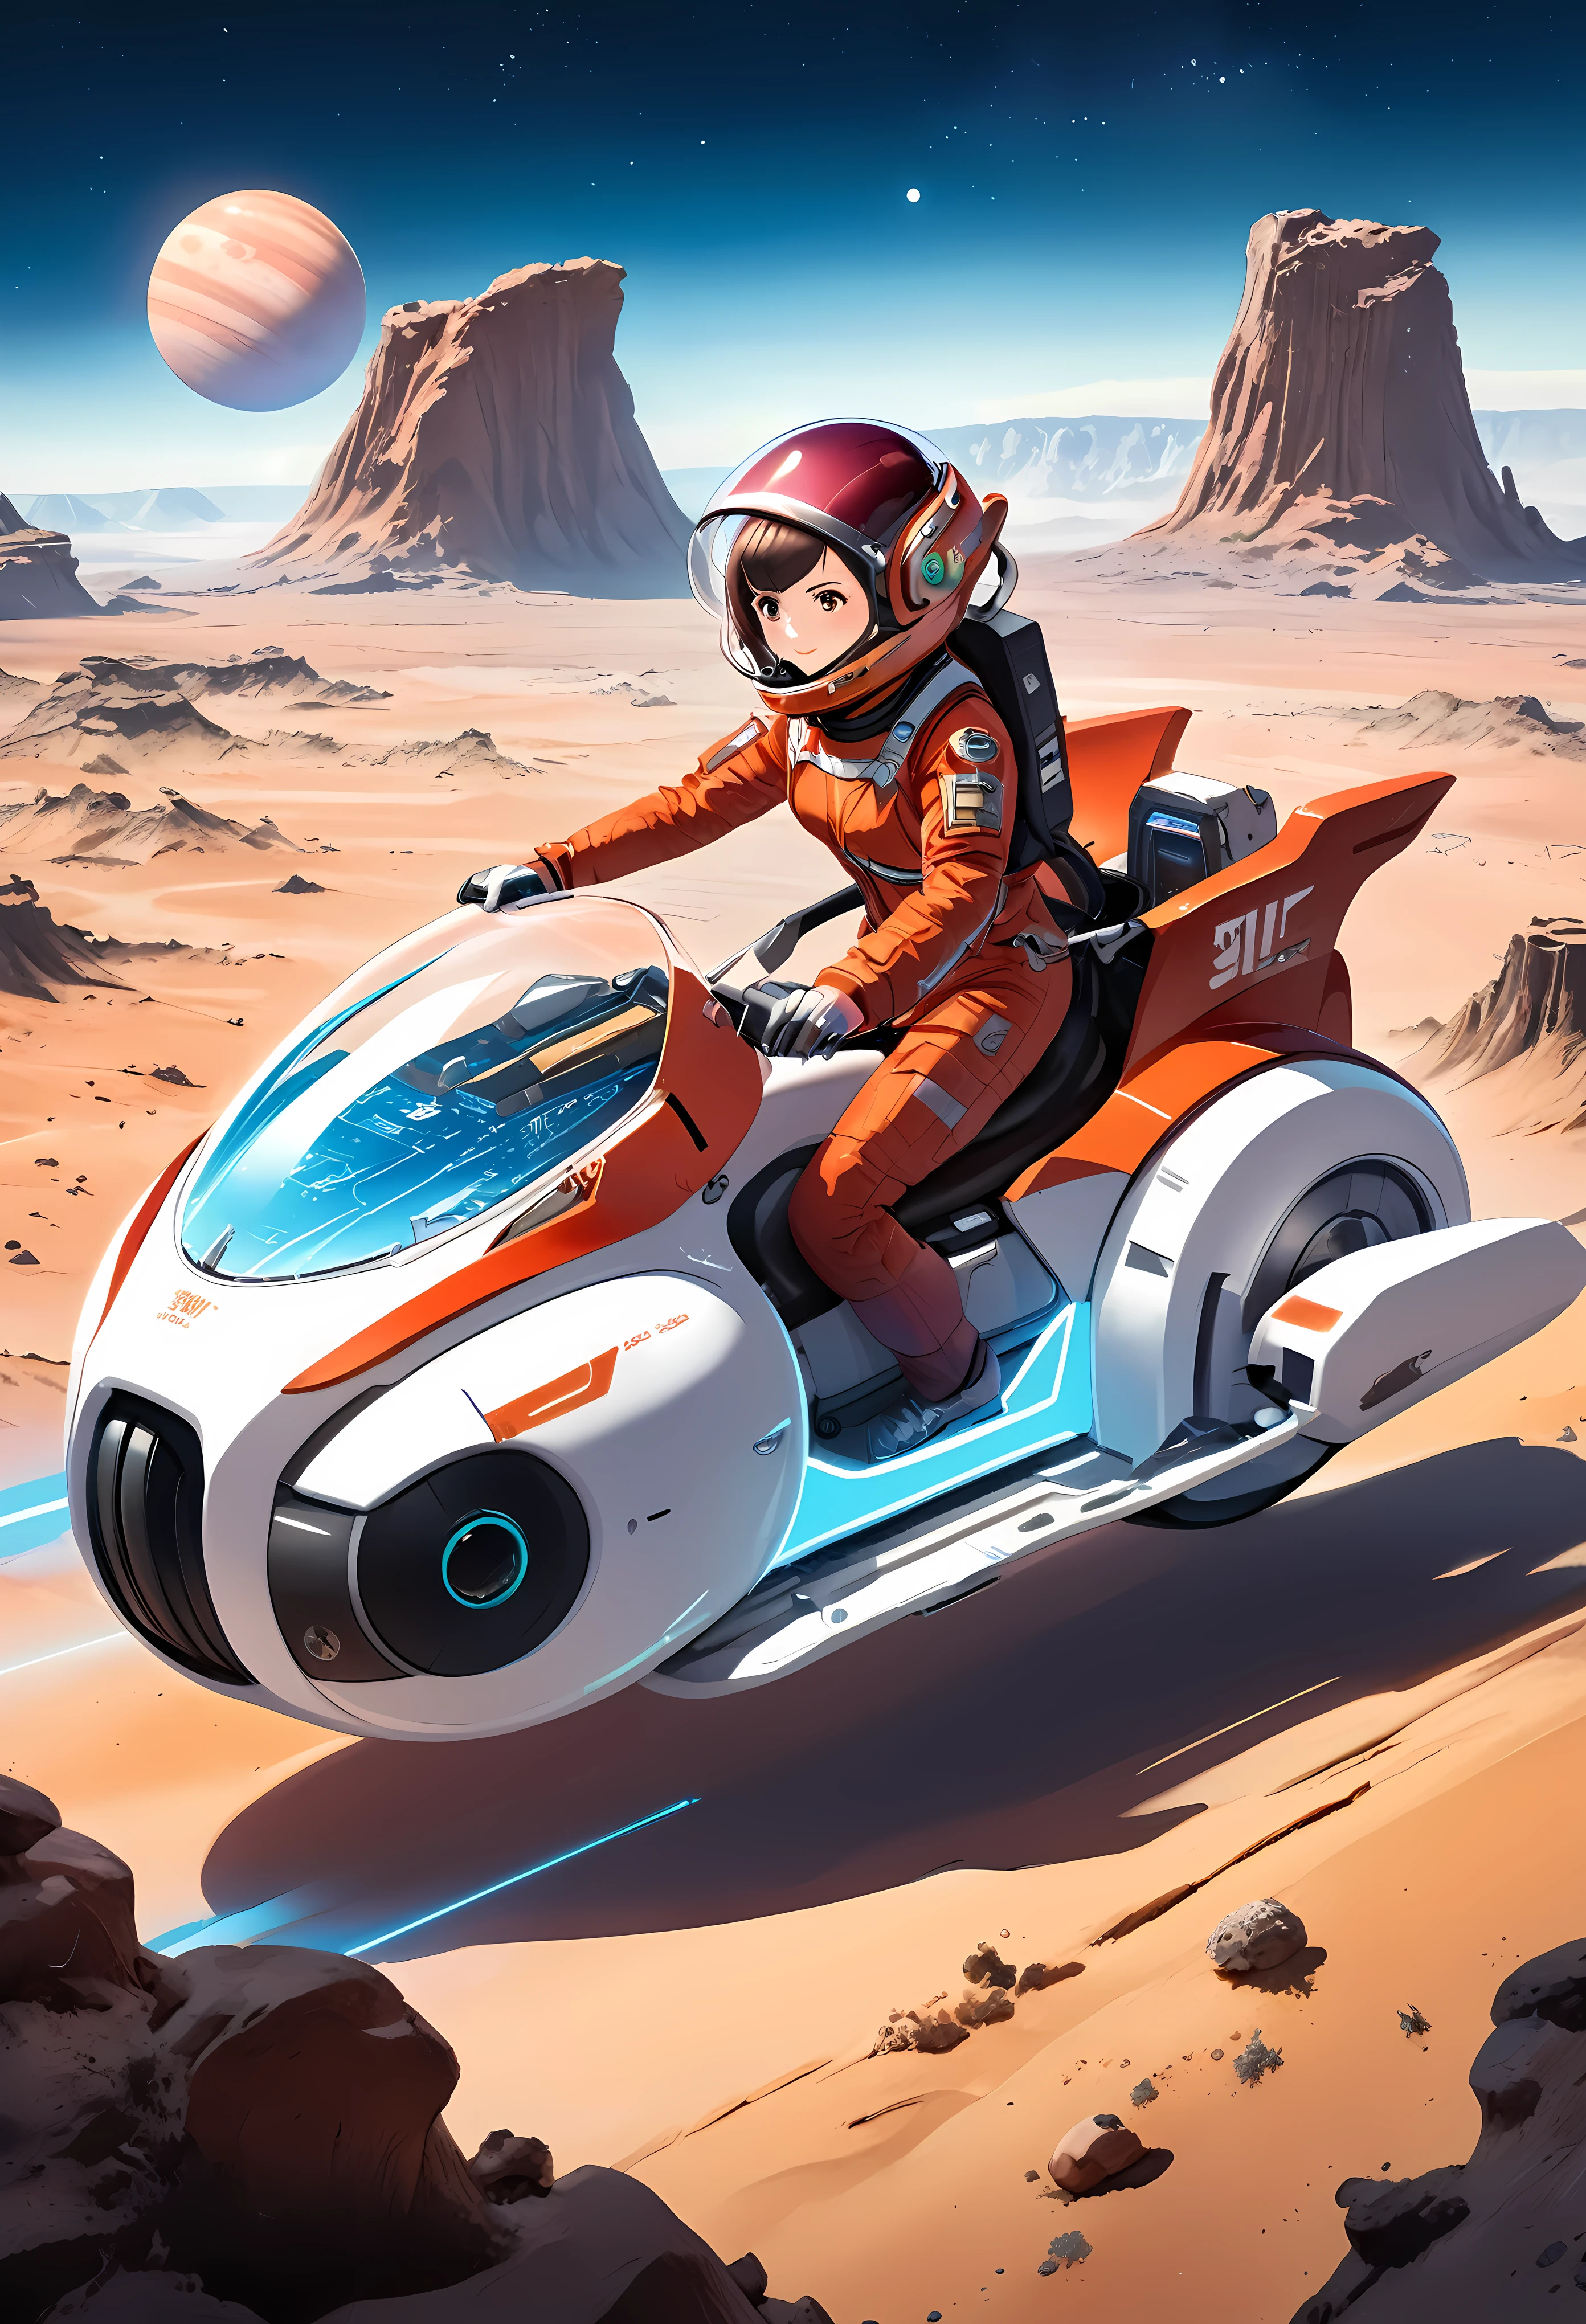 Create a 세부 사항ed image of a female astronaut riding a futuristic hoverbike on an alien planet. 우주비행사는 매끈한 옷을 입어야 해요, 투명한 헬멧을 갖춘 고급 우주복, 그녀의 결의에 찬 표정을 보여줍니다. Her spacesuit should be white with met모두ic accents, 첨단 생명 유지 시스템과 팔에 디지털 디스플레이가 장착되어 있습니다.. (짧은 머리). 호버바이크는 매끄럽게 디자인되어야 합니다, aerodynamic 설계 with a low-slung, 글로시한 마감이 돋보이는 생동감 넘치는 레드 컬러의 길쭉한 바디. 부드러운 파란색 빛을 발산하는 고급 반중력 추진기가 있어야 합니다., 앞쪽에 위치, 호버링 효과를 줌. The hoverbike should feature 세부 사항ed decals and futuristic text, 라이더를 위한 곡선형 시트 포함. 핸들바는 최소화되어야 합니다., with advanced digital controls and displays integrated into the 설계. 외계 행성의 풍경은 이국적이고 초자연적이어야 합니다., 험준한 지형으로, 이상한 암석, 그리고 다채로운, 배경에 여러 개의 달이나 행성이 보이는 별이 가득한 하늘. 환경은 생생한 색상과 차분한 색상이 혼합되어 있어야 합니다., 미스터리와 모험의 느낌을 조성합니다..  | ((완벽한_구성, 완벽한_설계, 완벽한_공들여 나열한 것, 완벽한_세부 사항, 극단론자_세부 사항ed)), ((향상시키다_모두, 고치다_모두)), 자세한 세부 사항, 향상시키다.